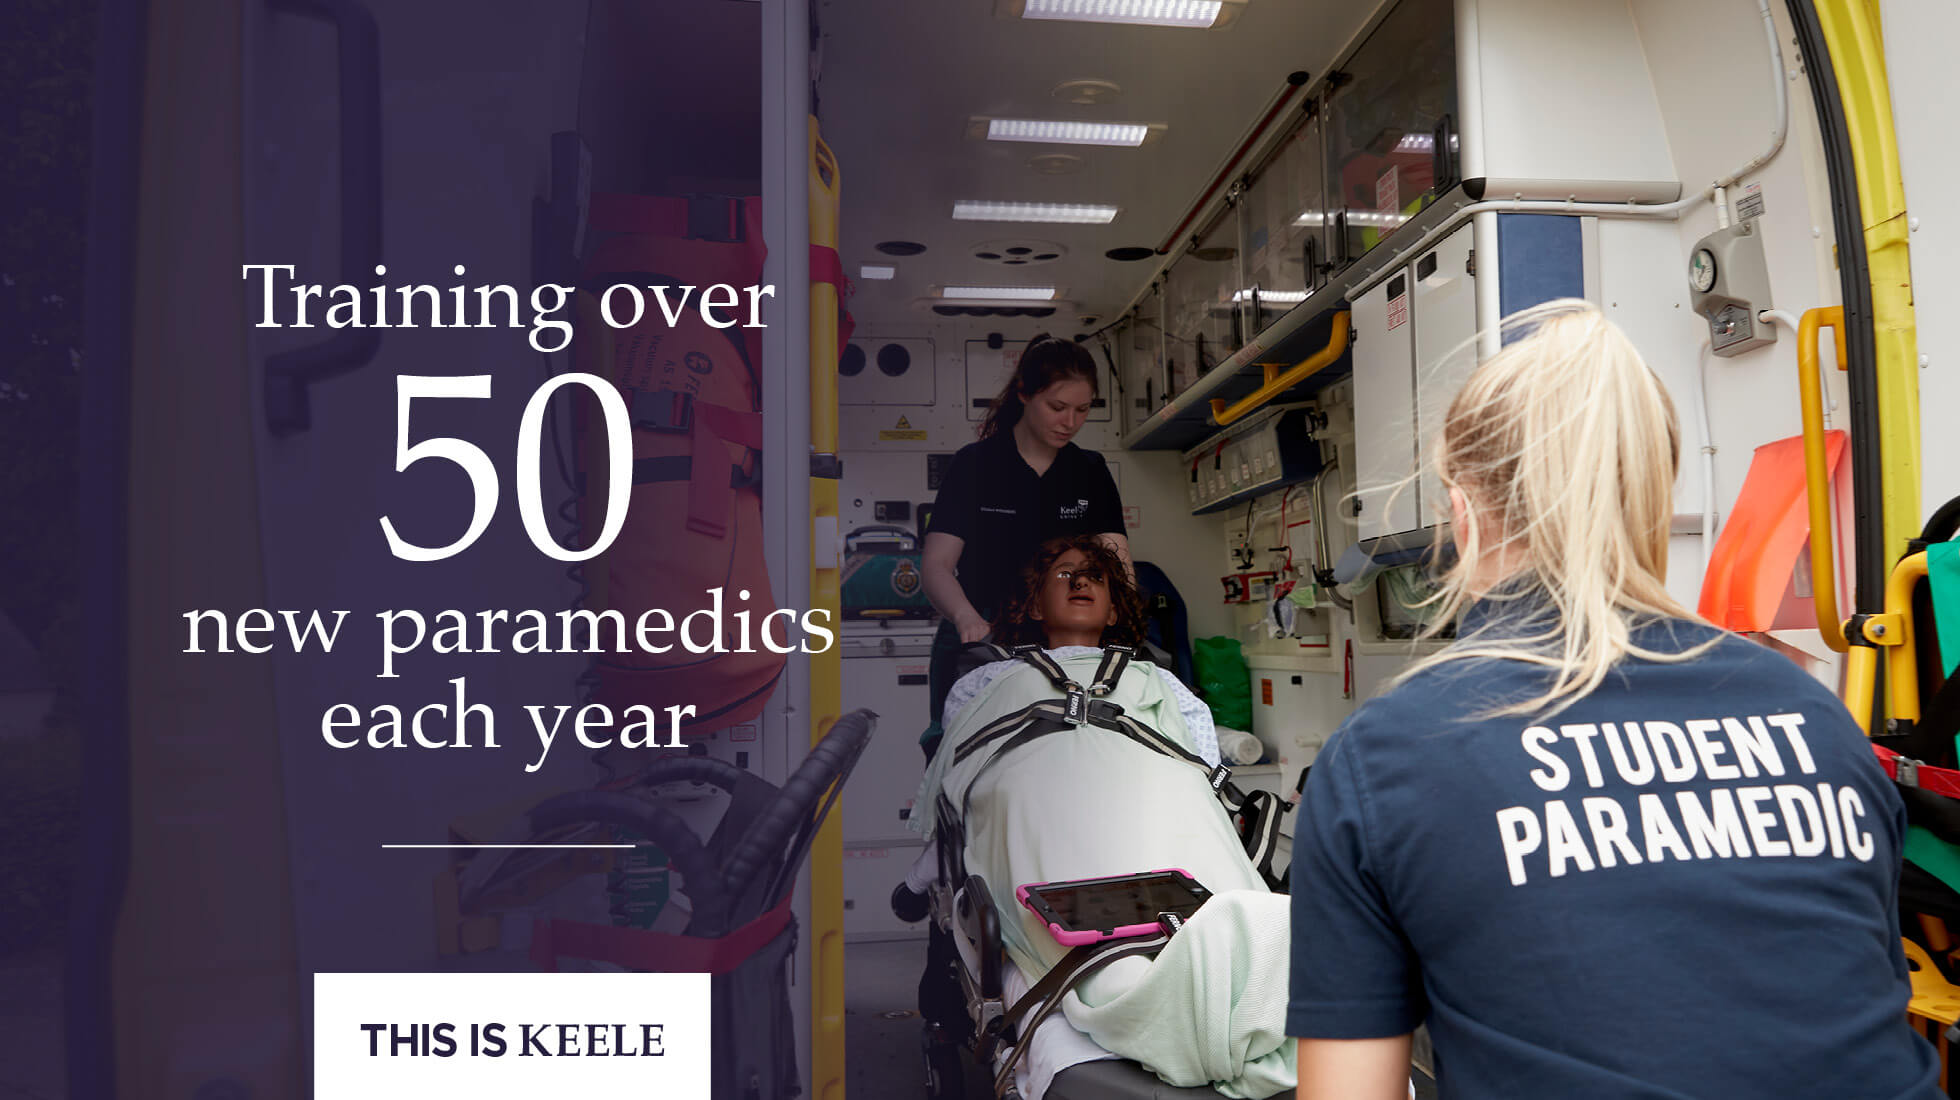 Training over 50 new paramedics each year